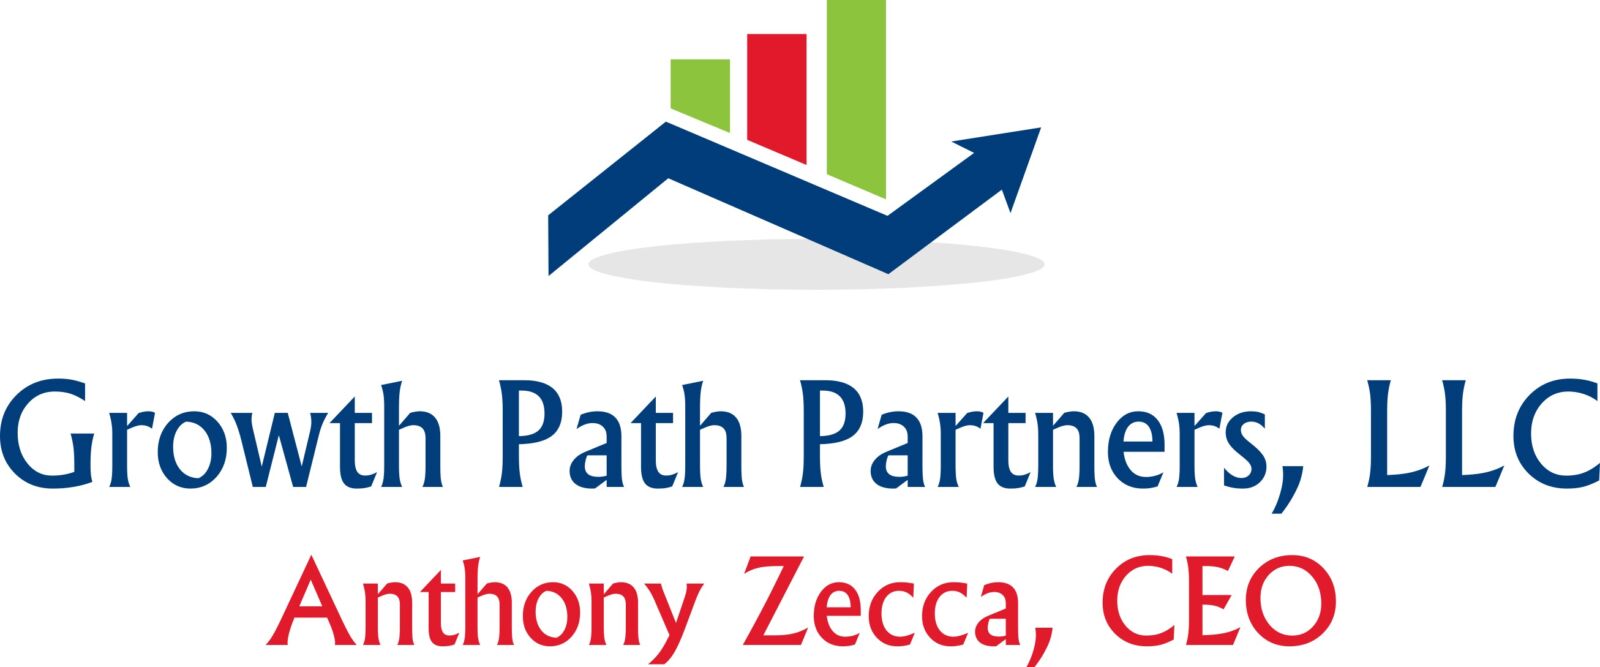 Zecca az21edg Growth Path Partners